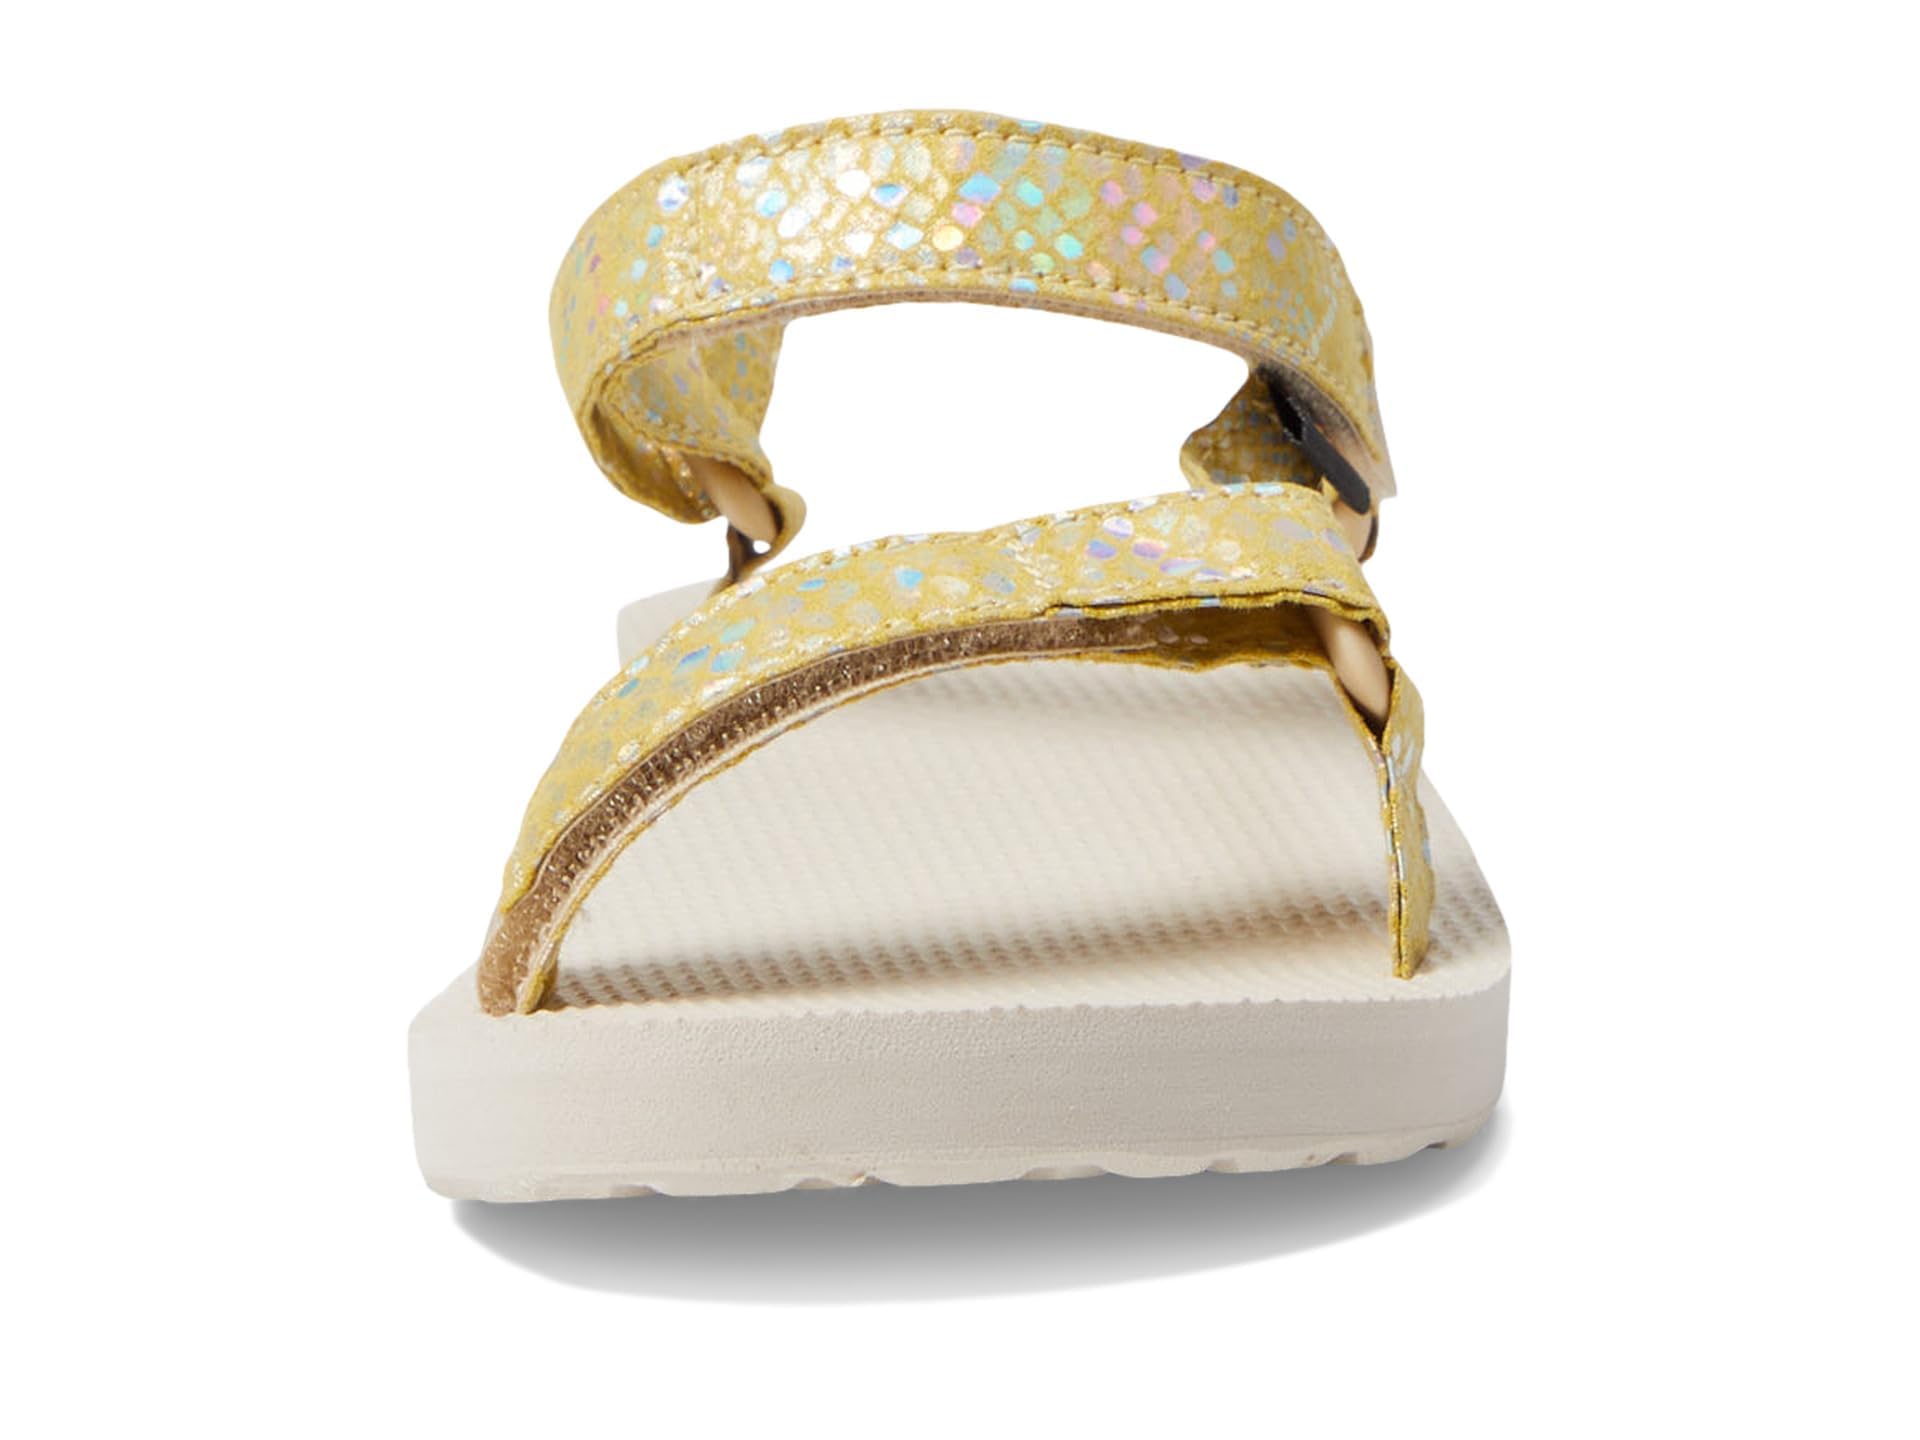 Teva Girl's Original Universal Sparklie Sandal